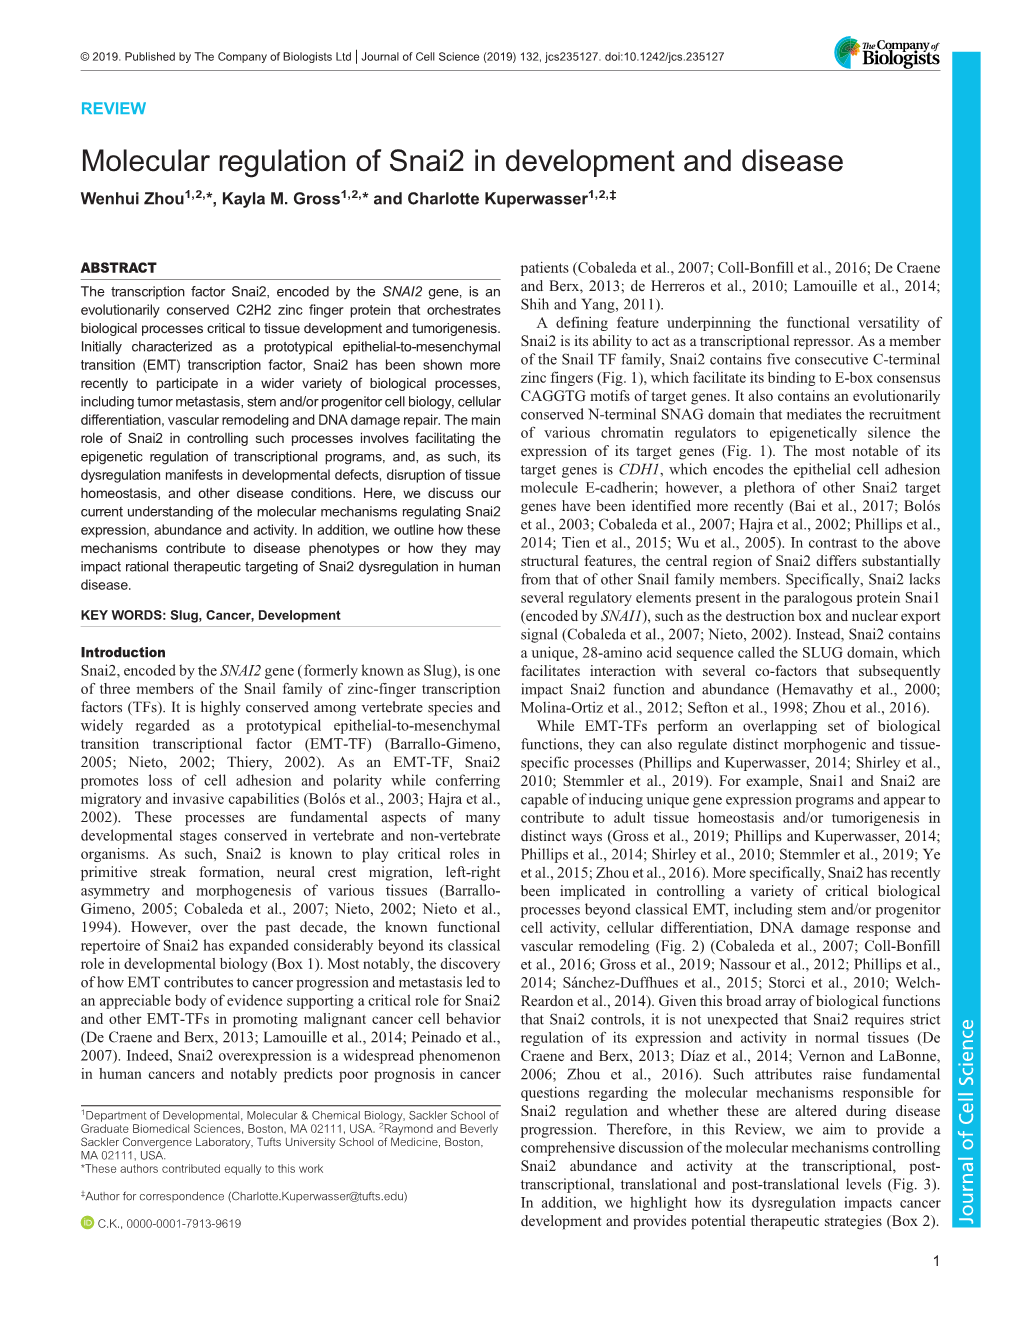 Molecular Regulation of Snai2 in Development and Disease Wenhui Zhou1,2,*, Kayla M